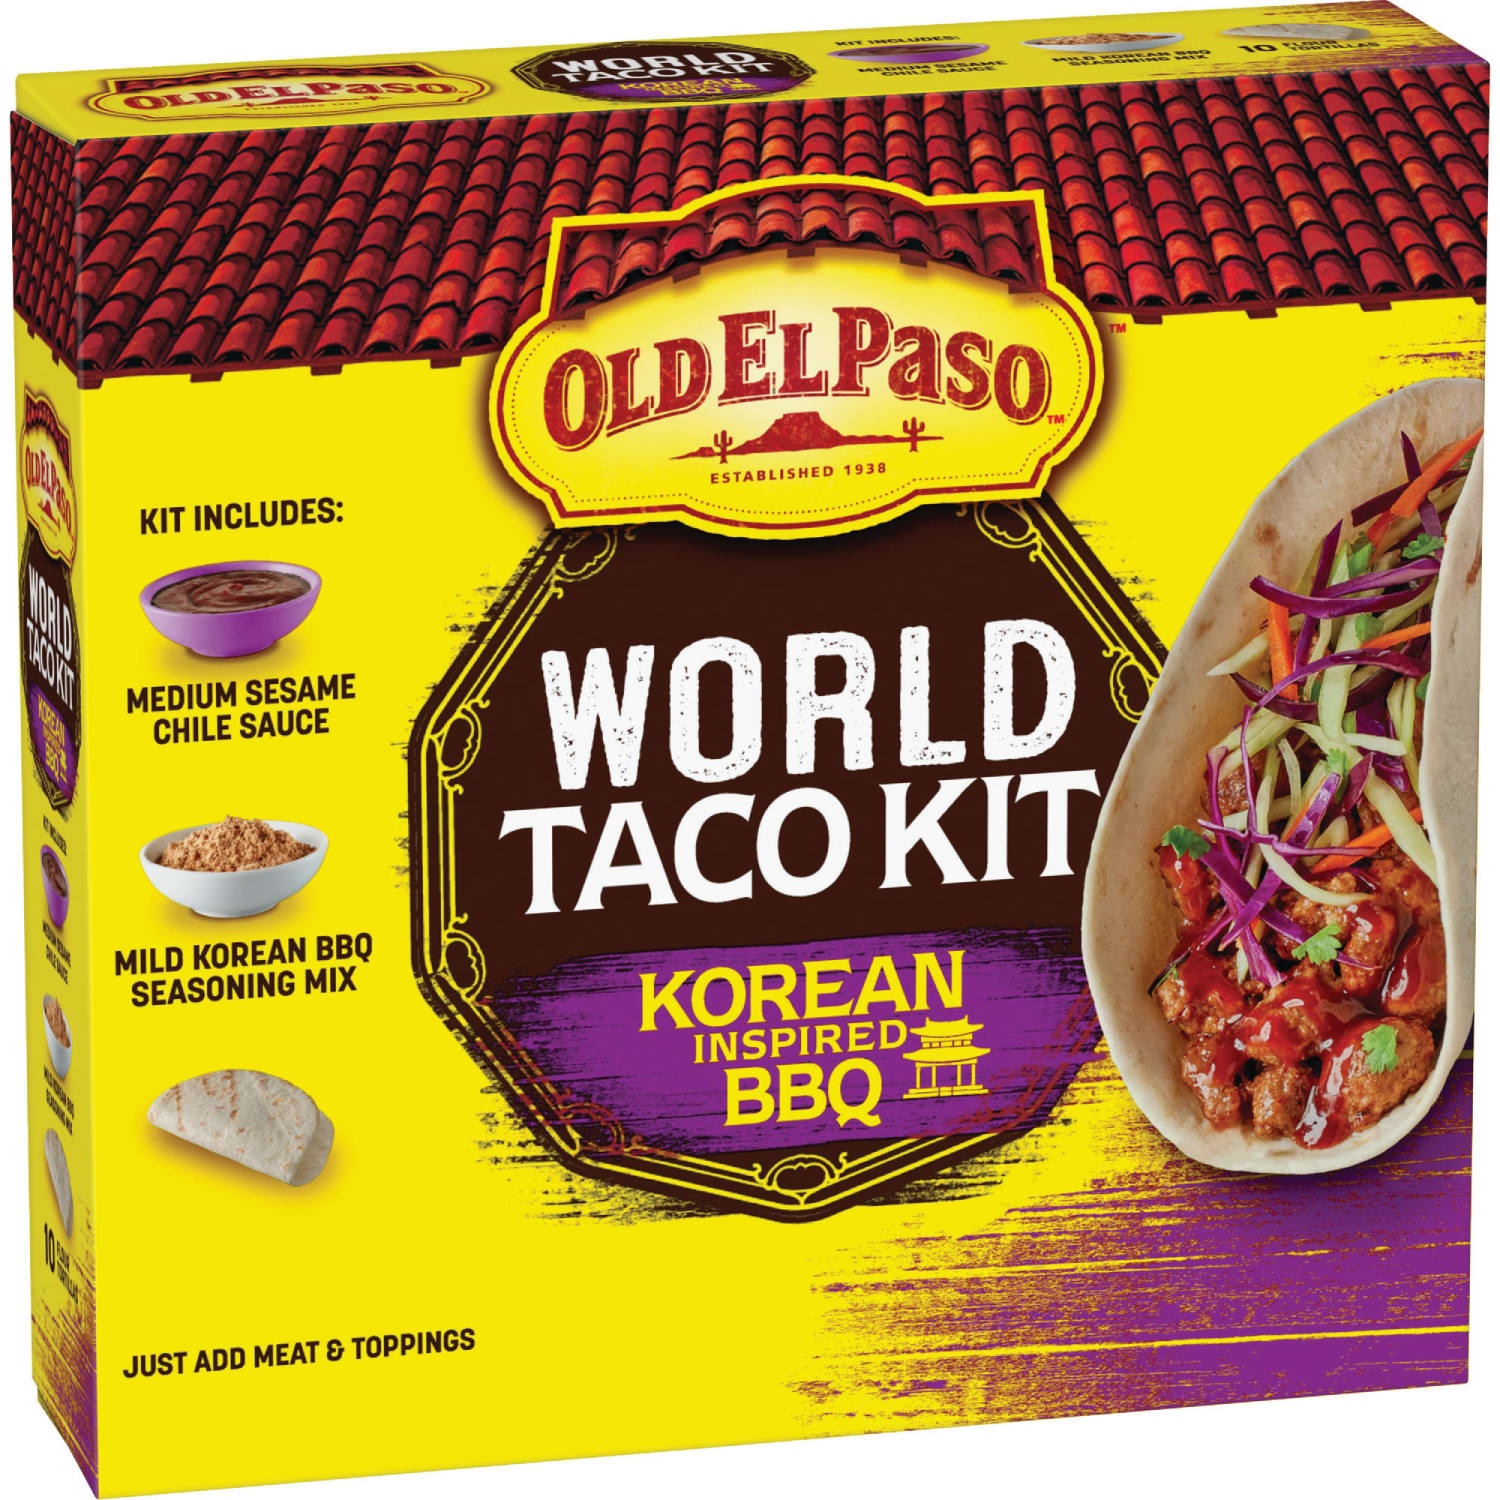 Old El Paso World Taco Kits bring new flavors taco night